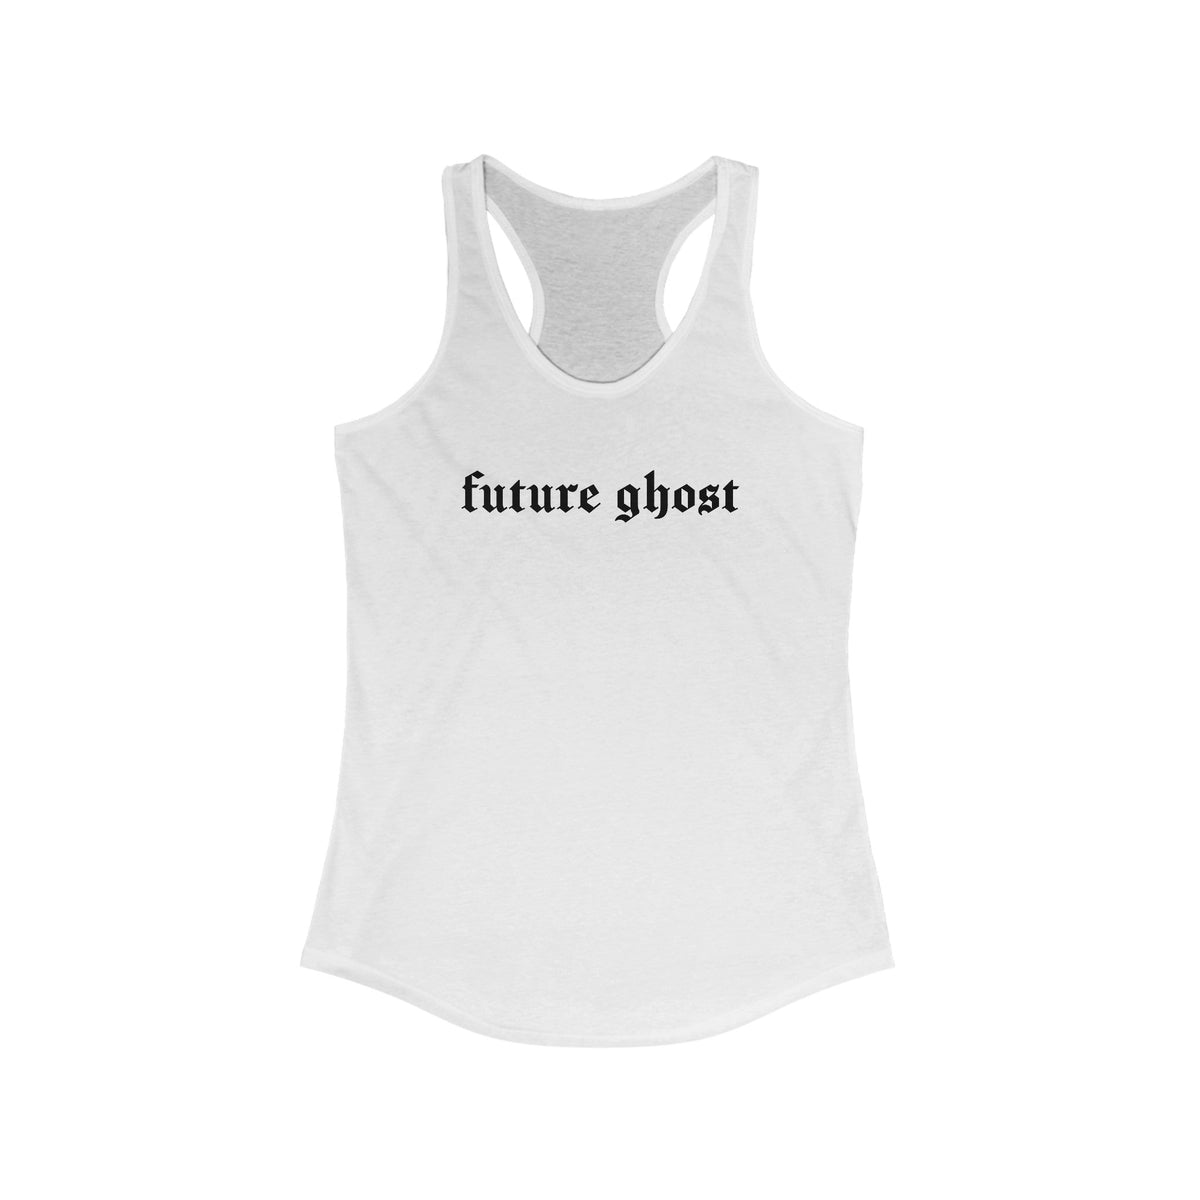 Future Ghost Women's Racerback Tank - Goth Cloth Co.Tank Top33777168792526680001